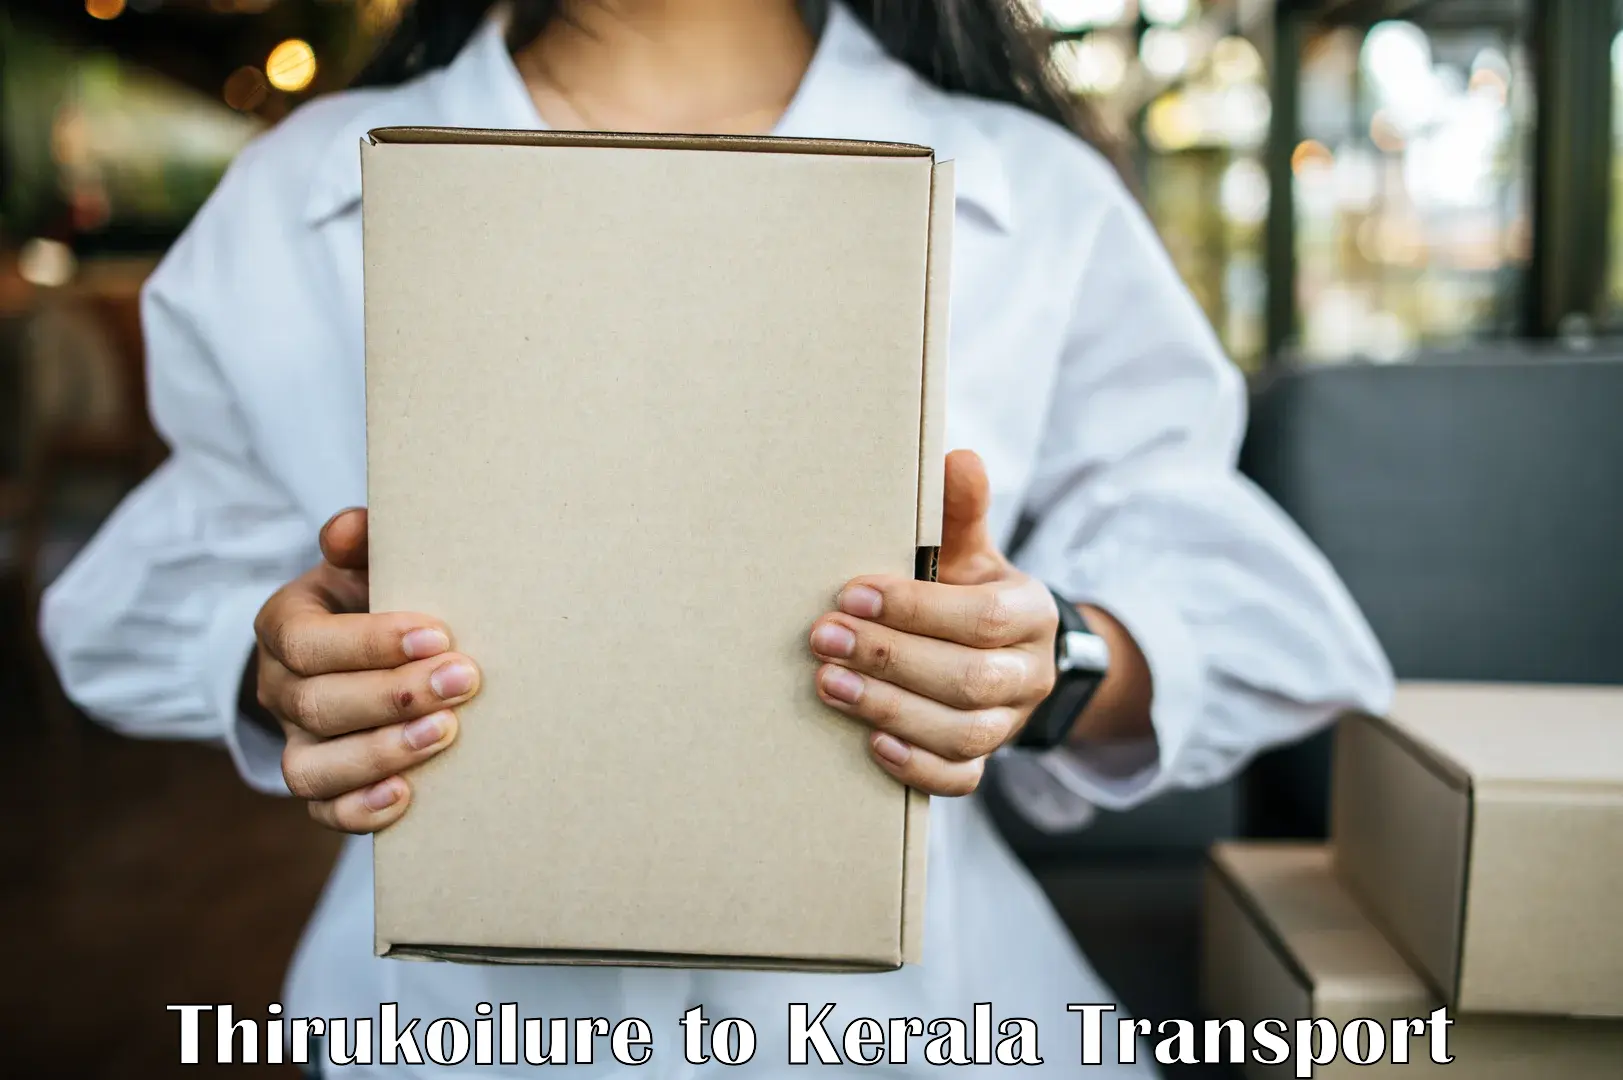 Transportation solution services Thirukoilure to Kalpetta